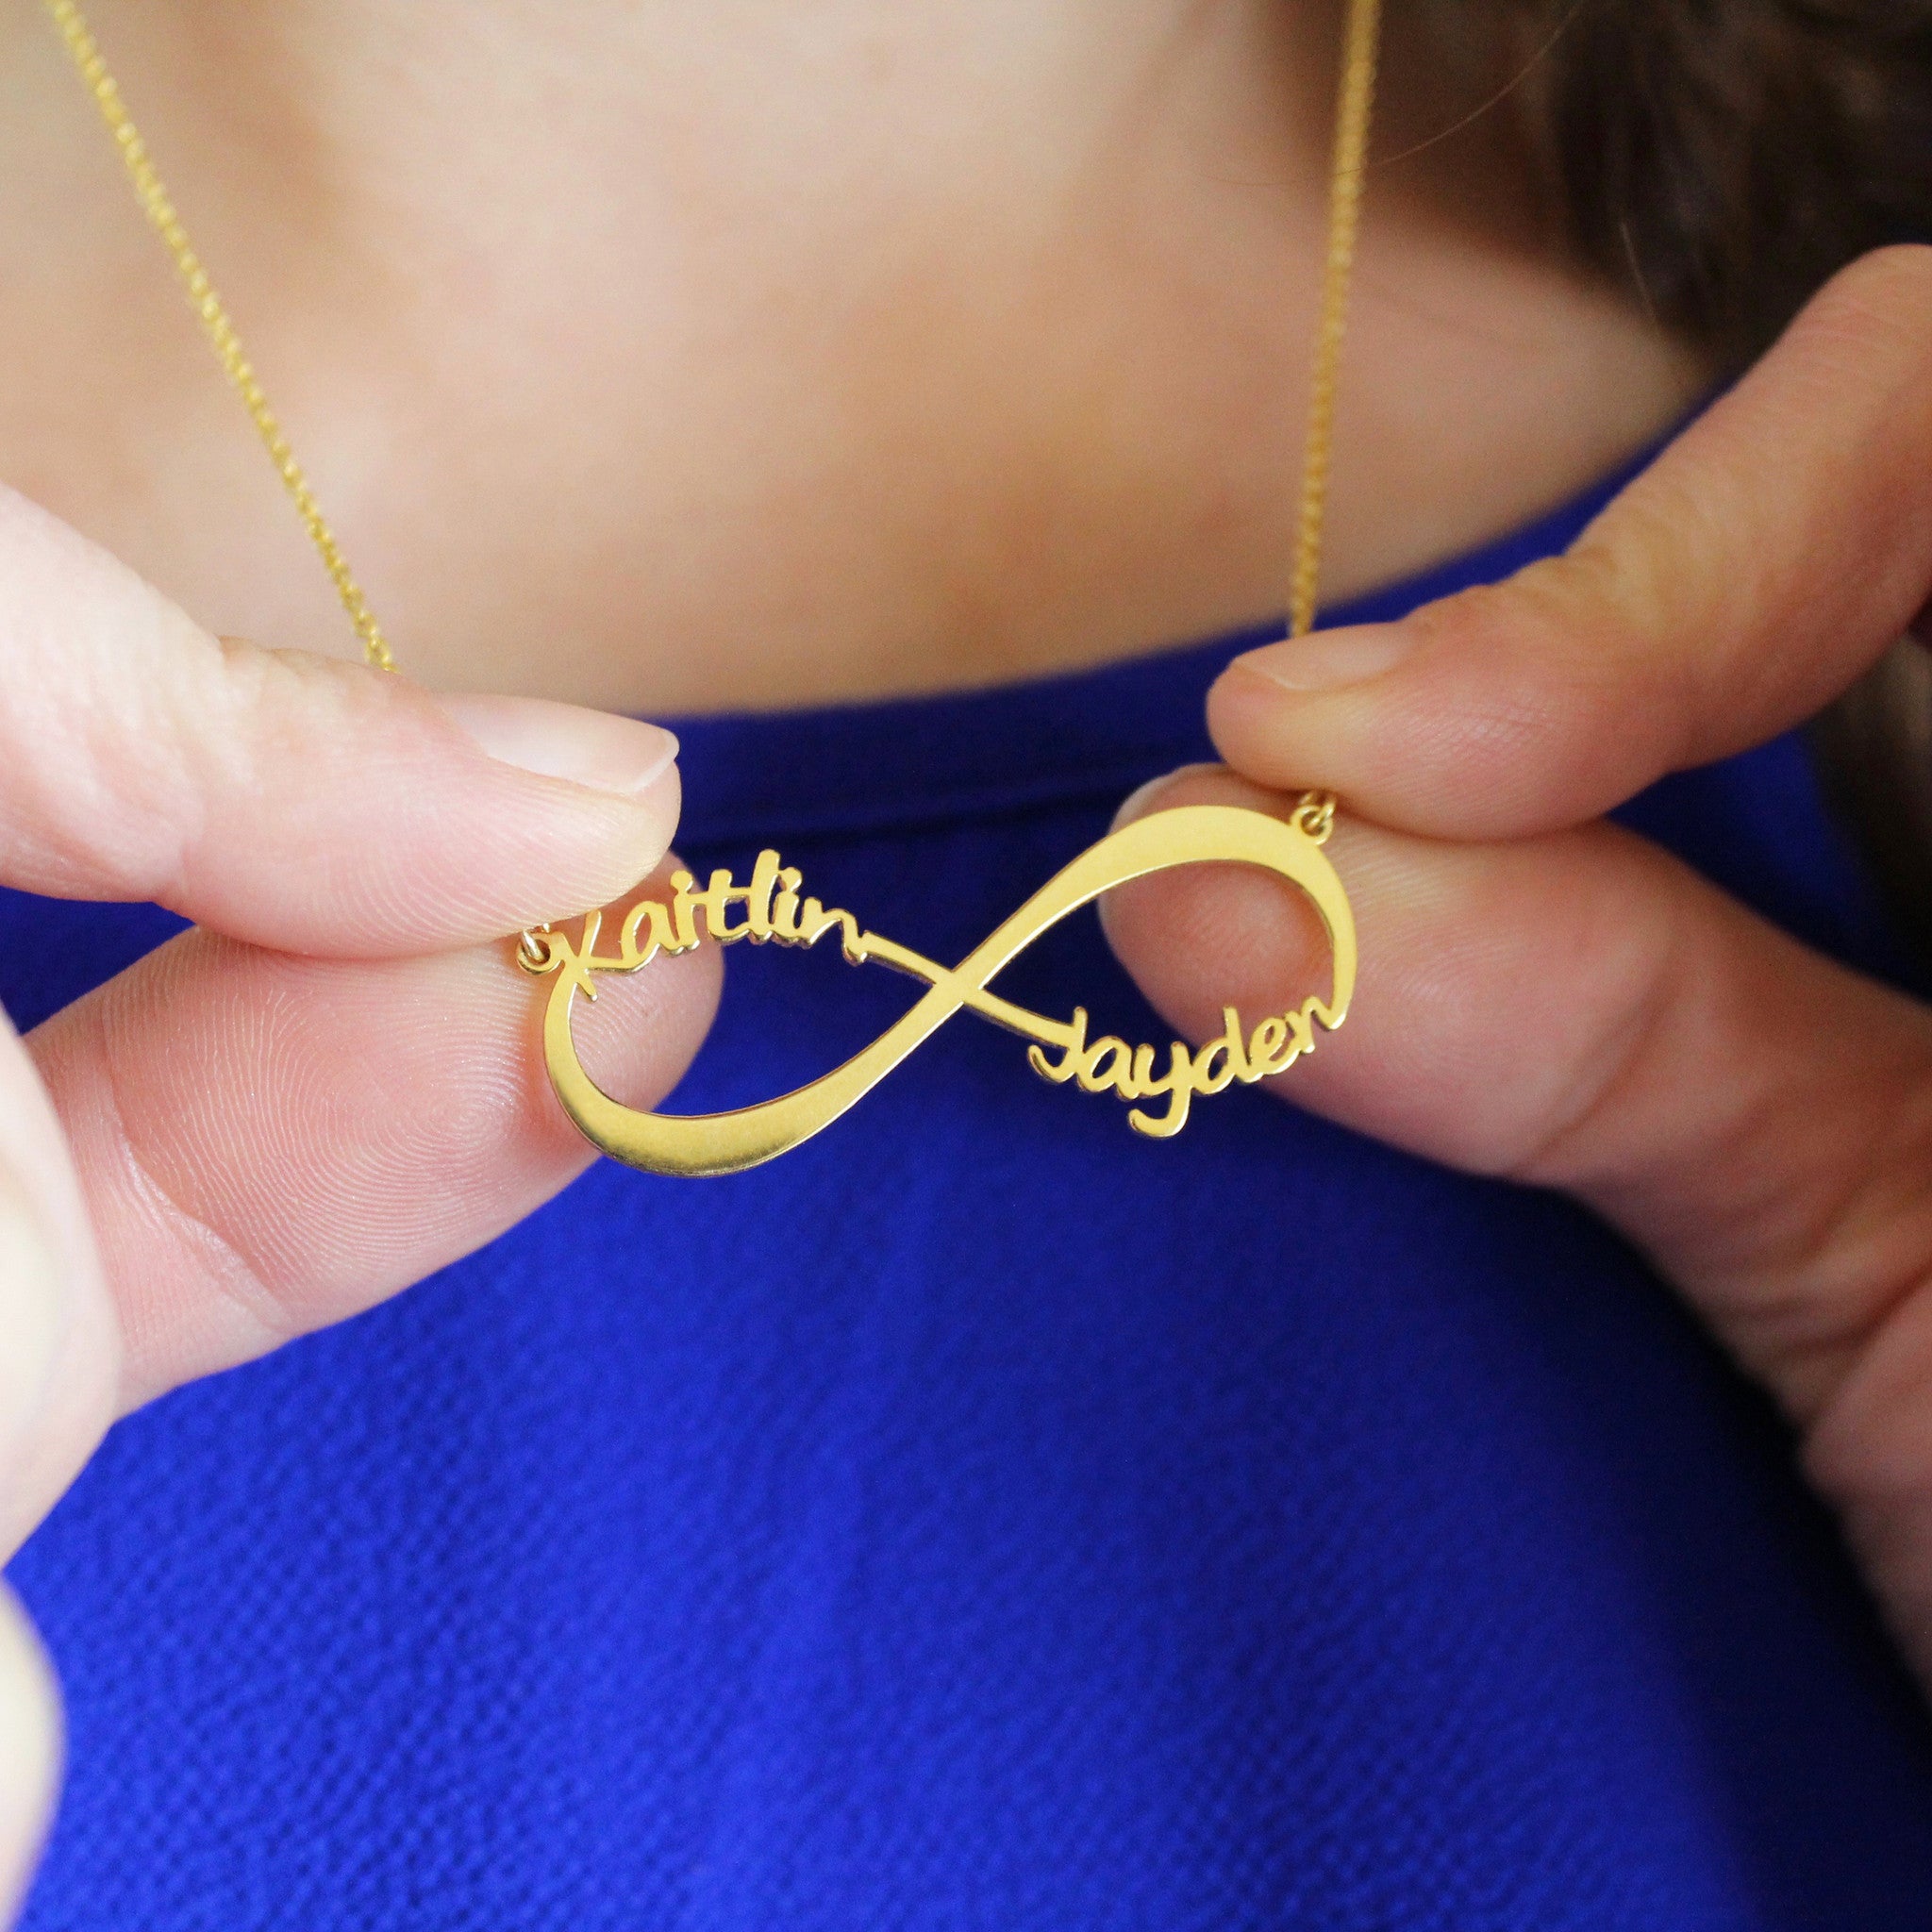 Kimiya Jewelers Personalizable Infinity Necklace